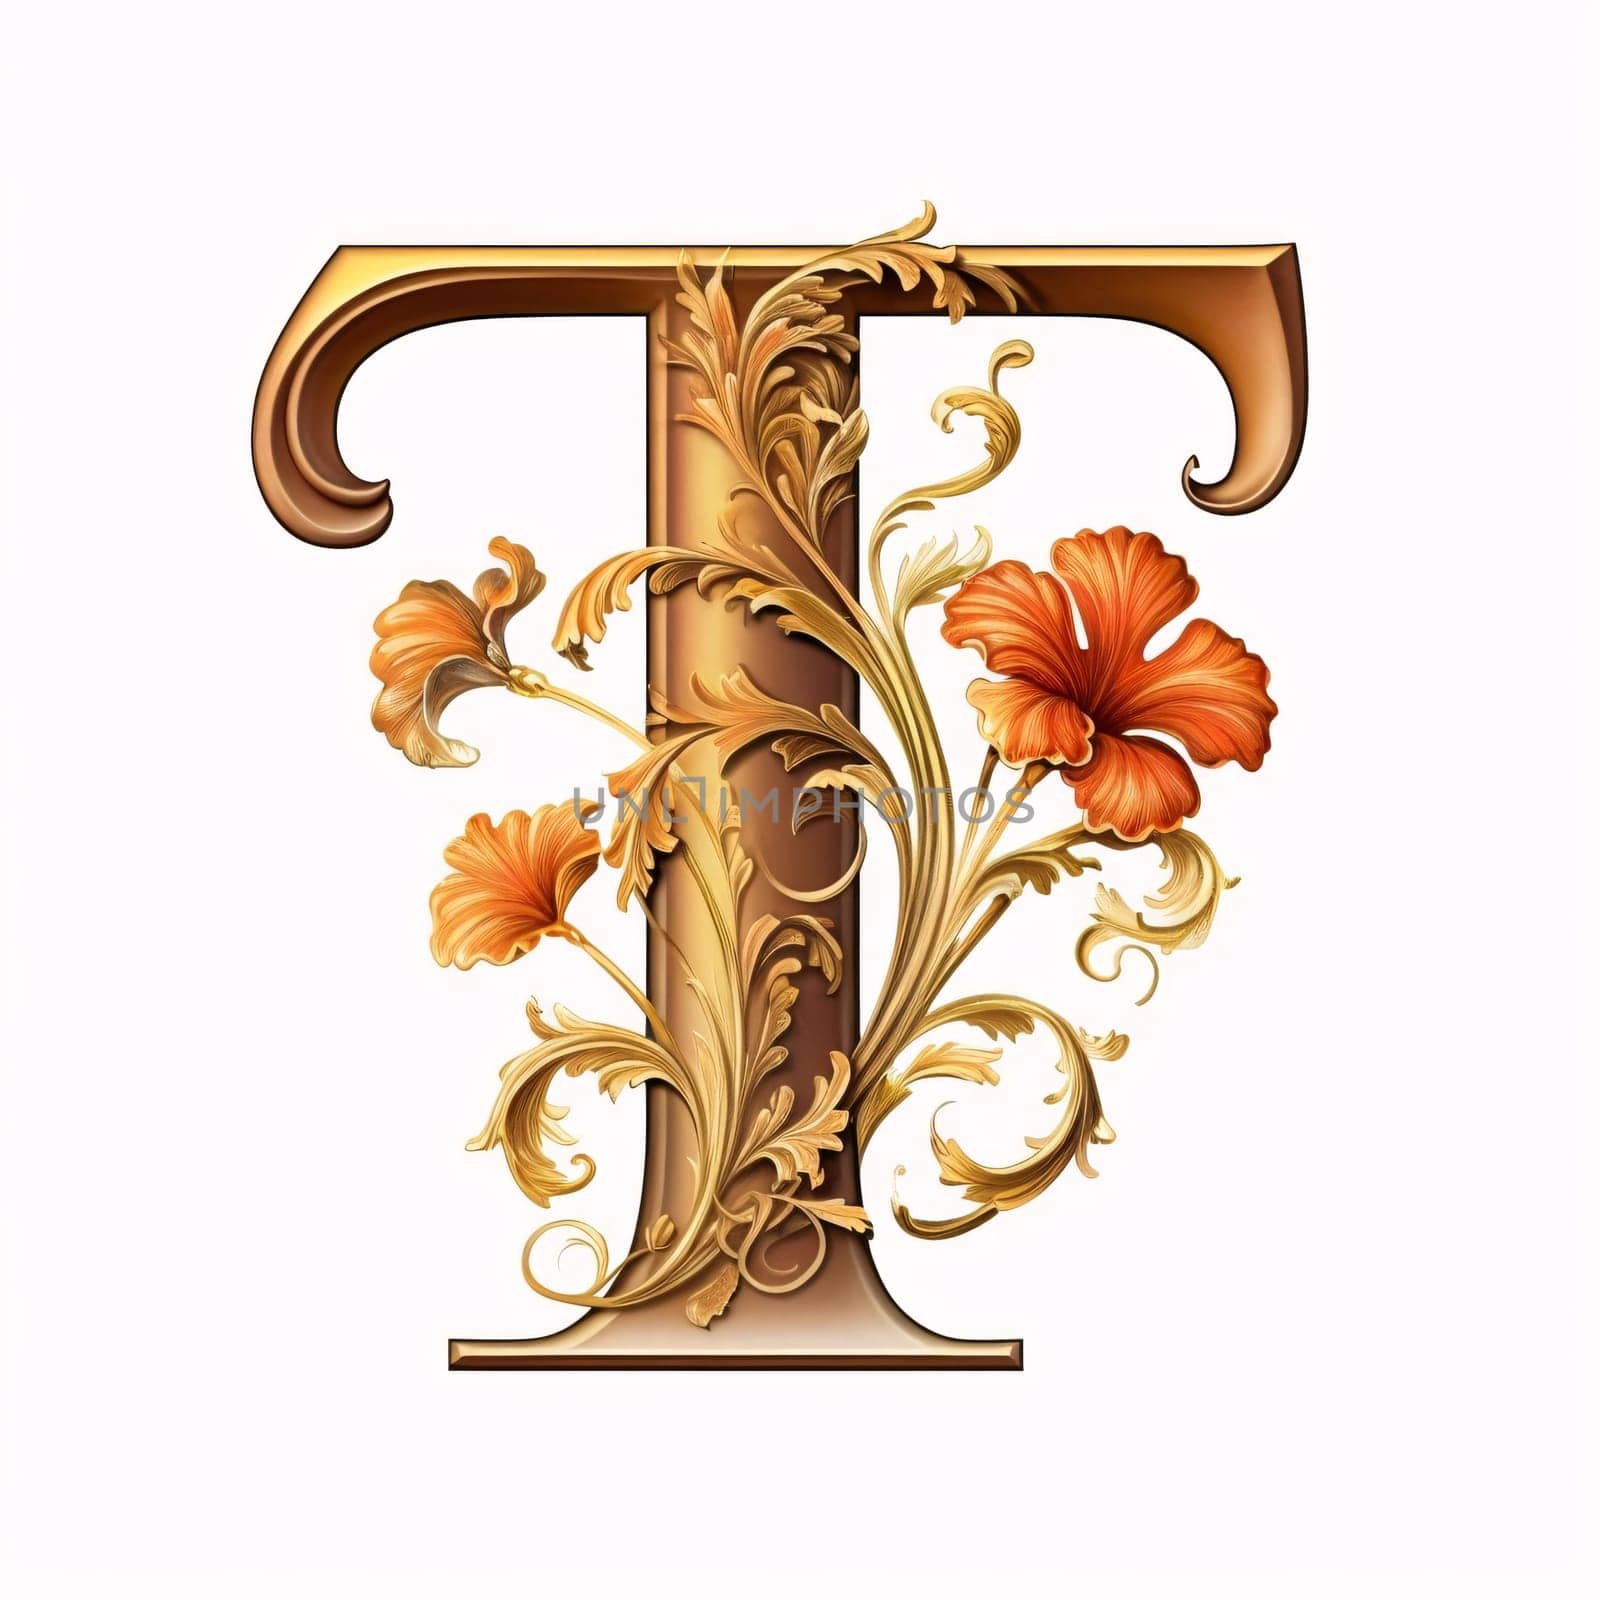 Graphic alphabet letters: Vintage letter T with floral ornament. Vector illustration for your design